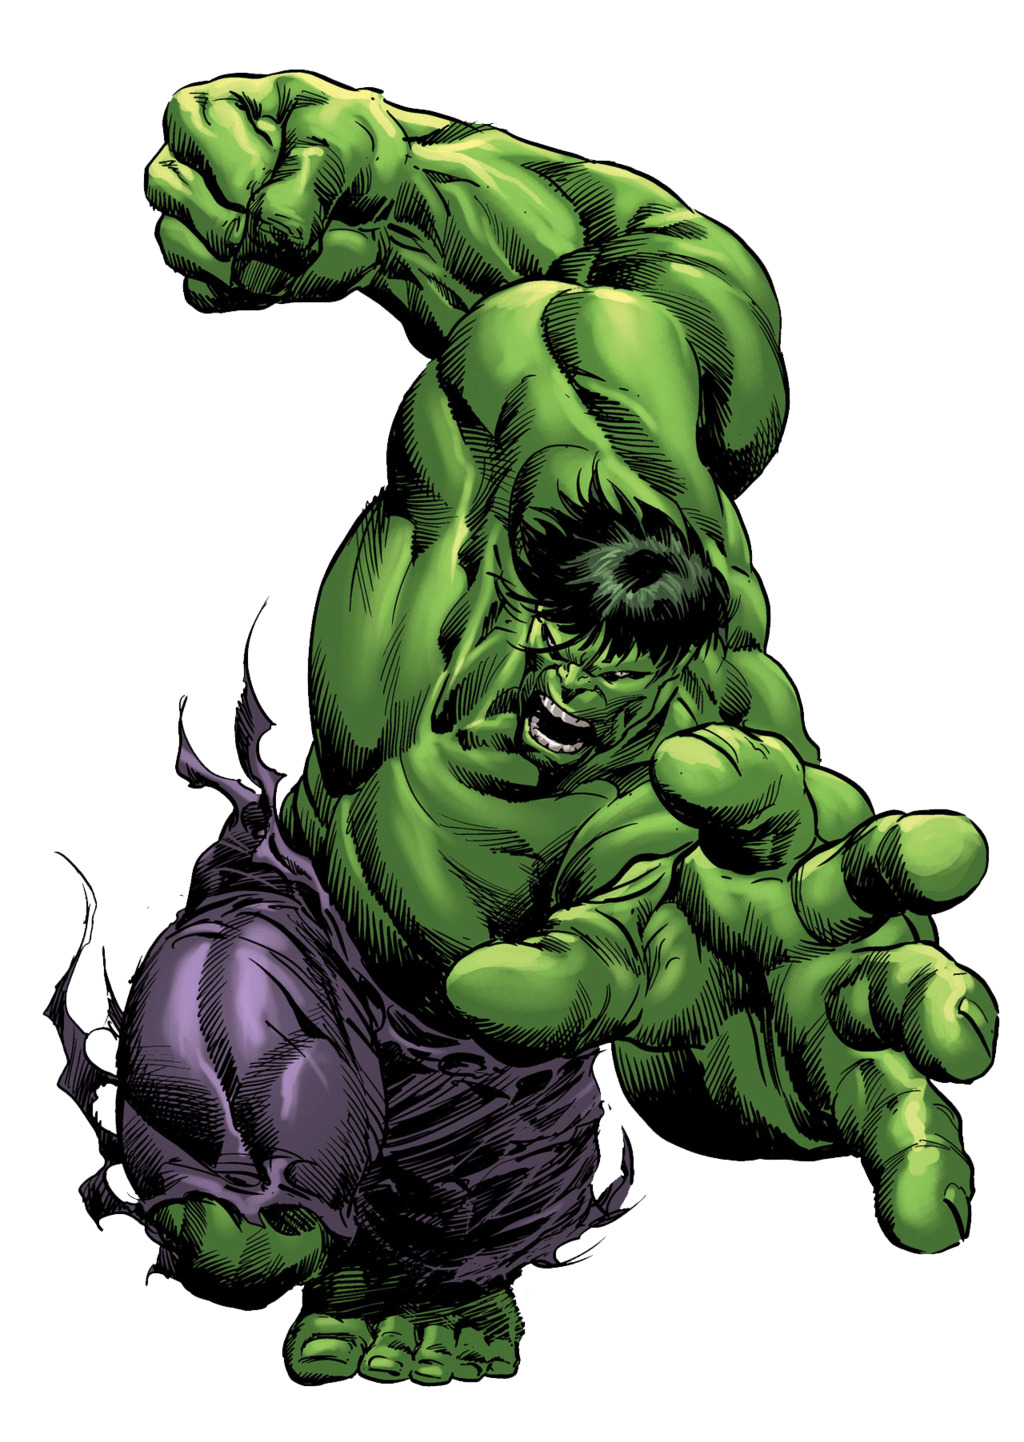 Hulk Attack icons